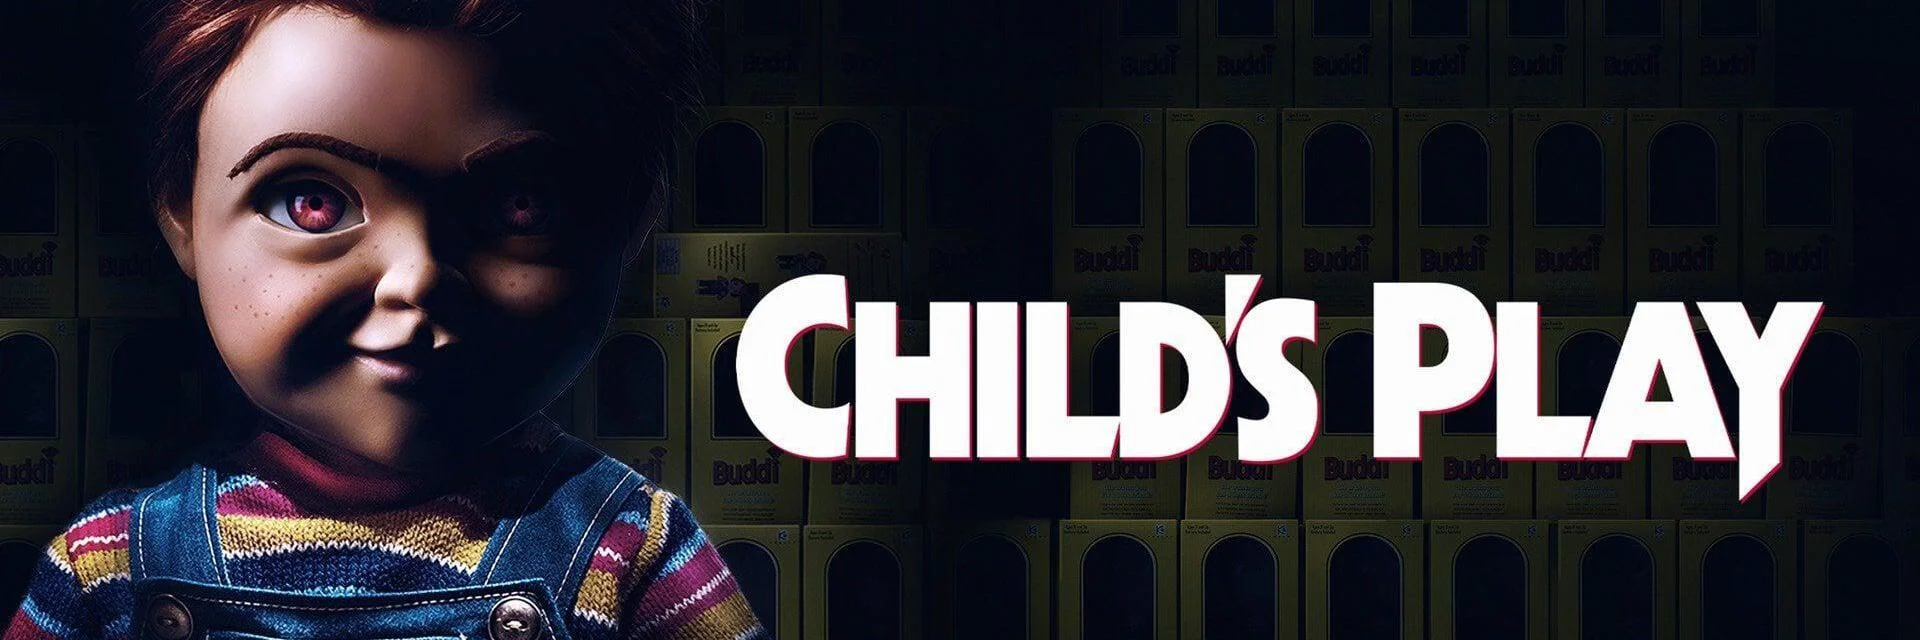 Child's Play 4K 2019 big poster